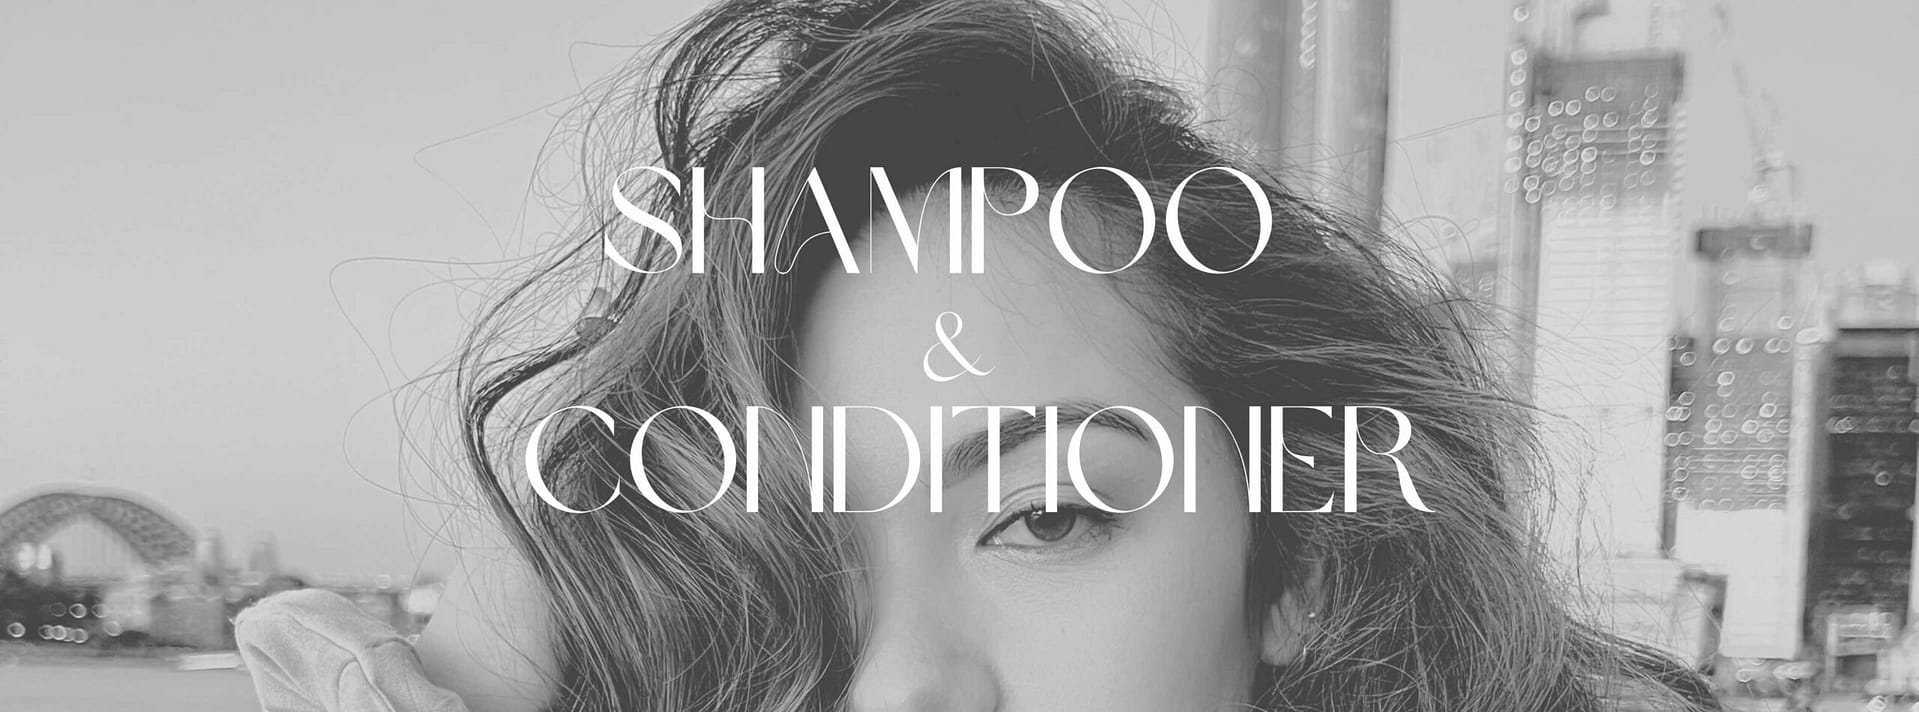 Shampoo & Conditioner banner